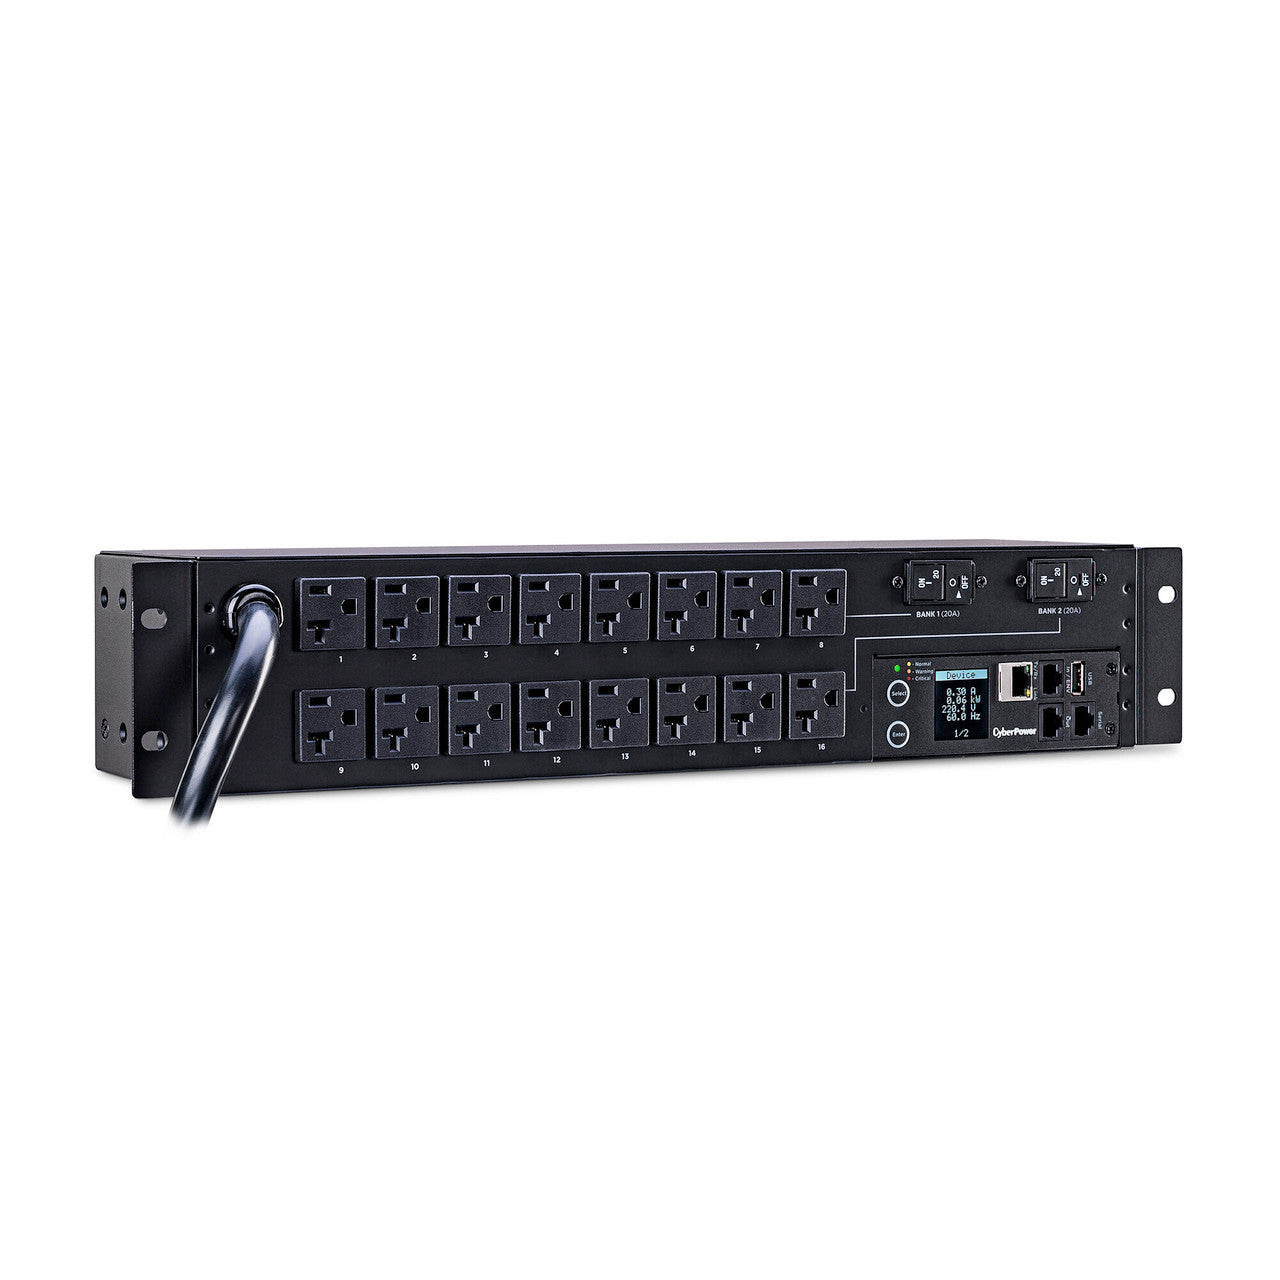 CyberPower PDU31003 Monitored PDU 30A 120V (16) 5-20R Outlets NEMA L5-30P 12ft Cord SNMP 1U 3YR WTY